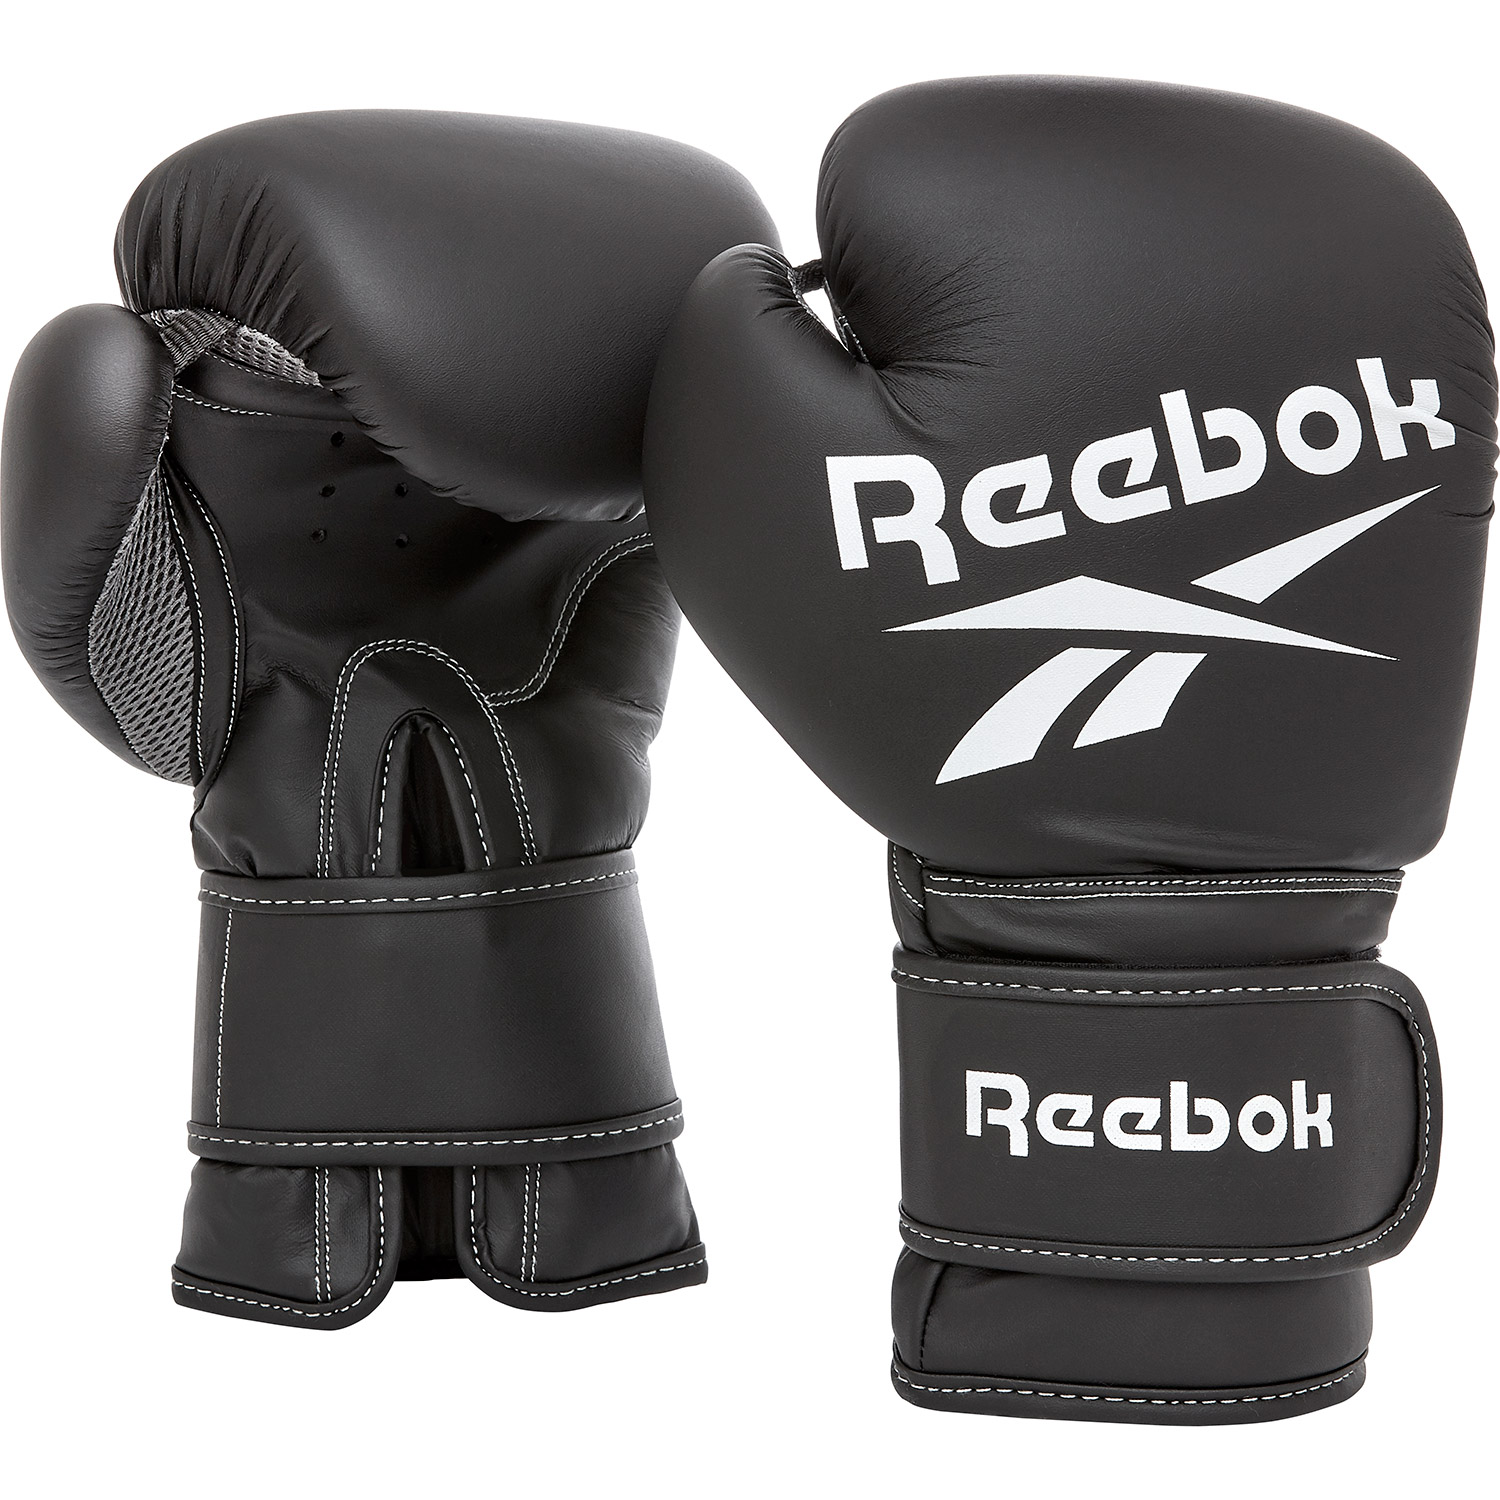 Reebok boxing gloves black 16 oz